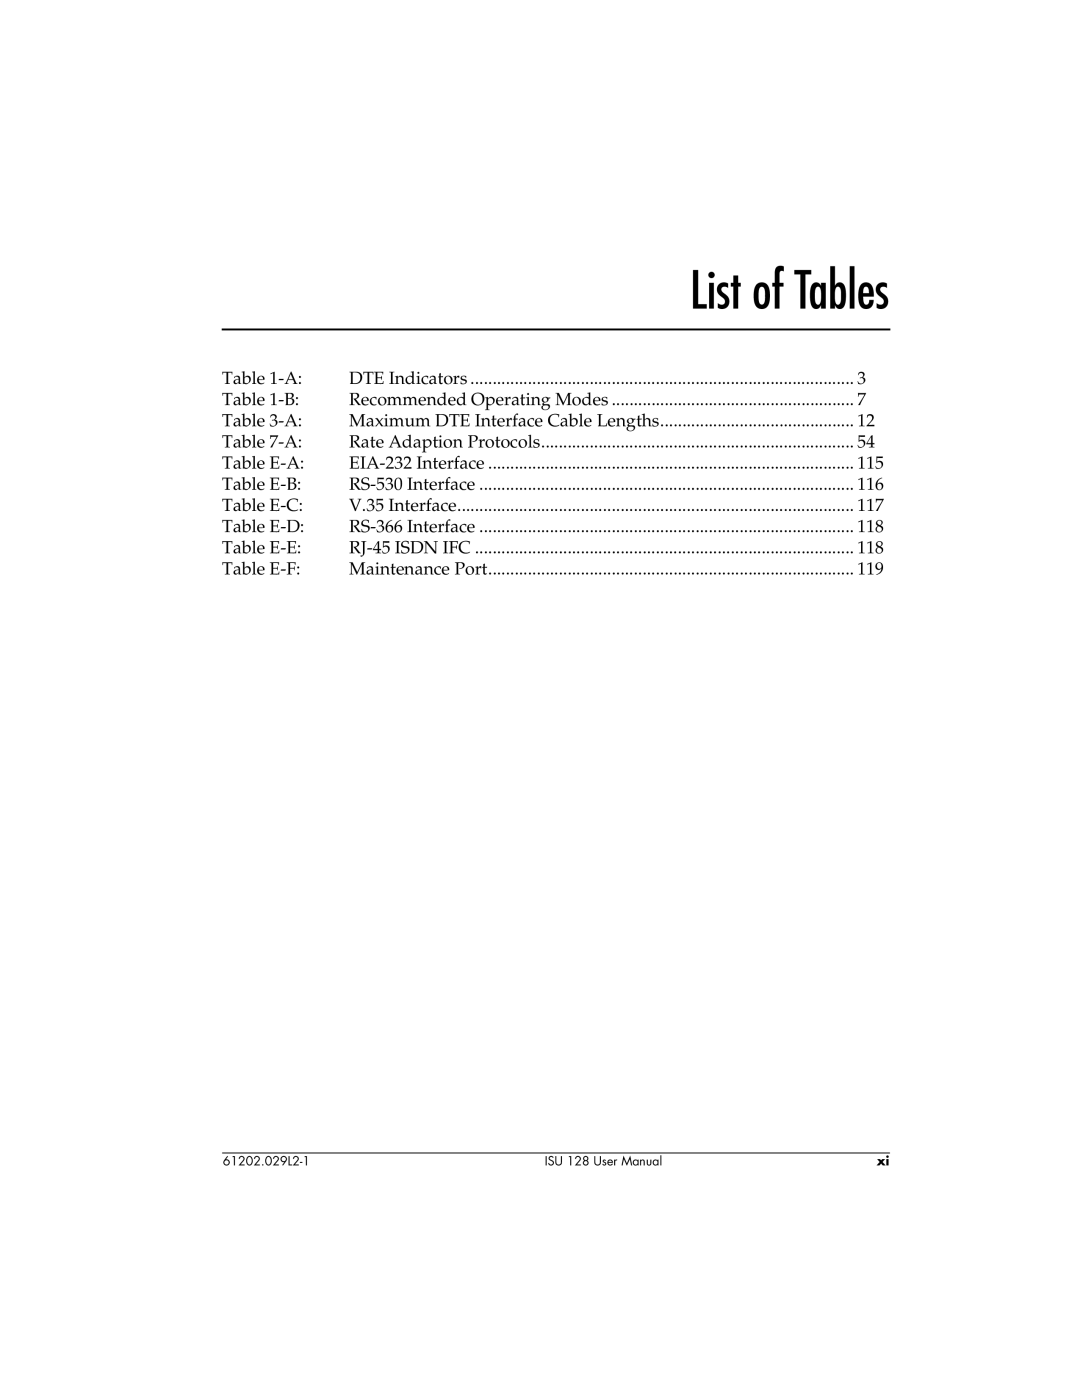 ADTRAN ISU 128 user manual List of Tables 